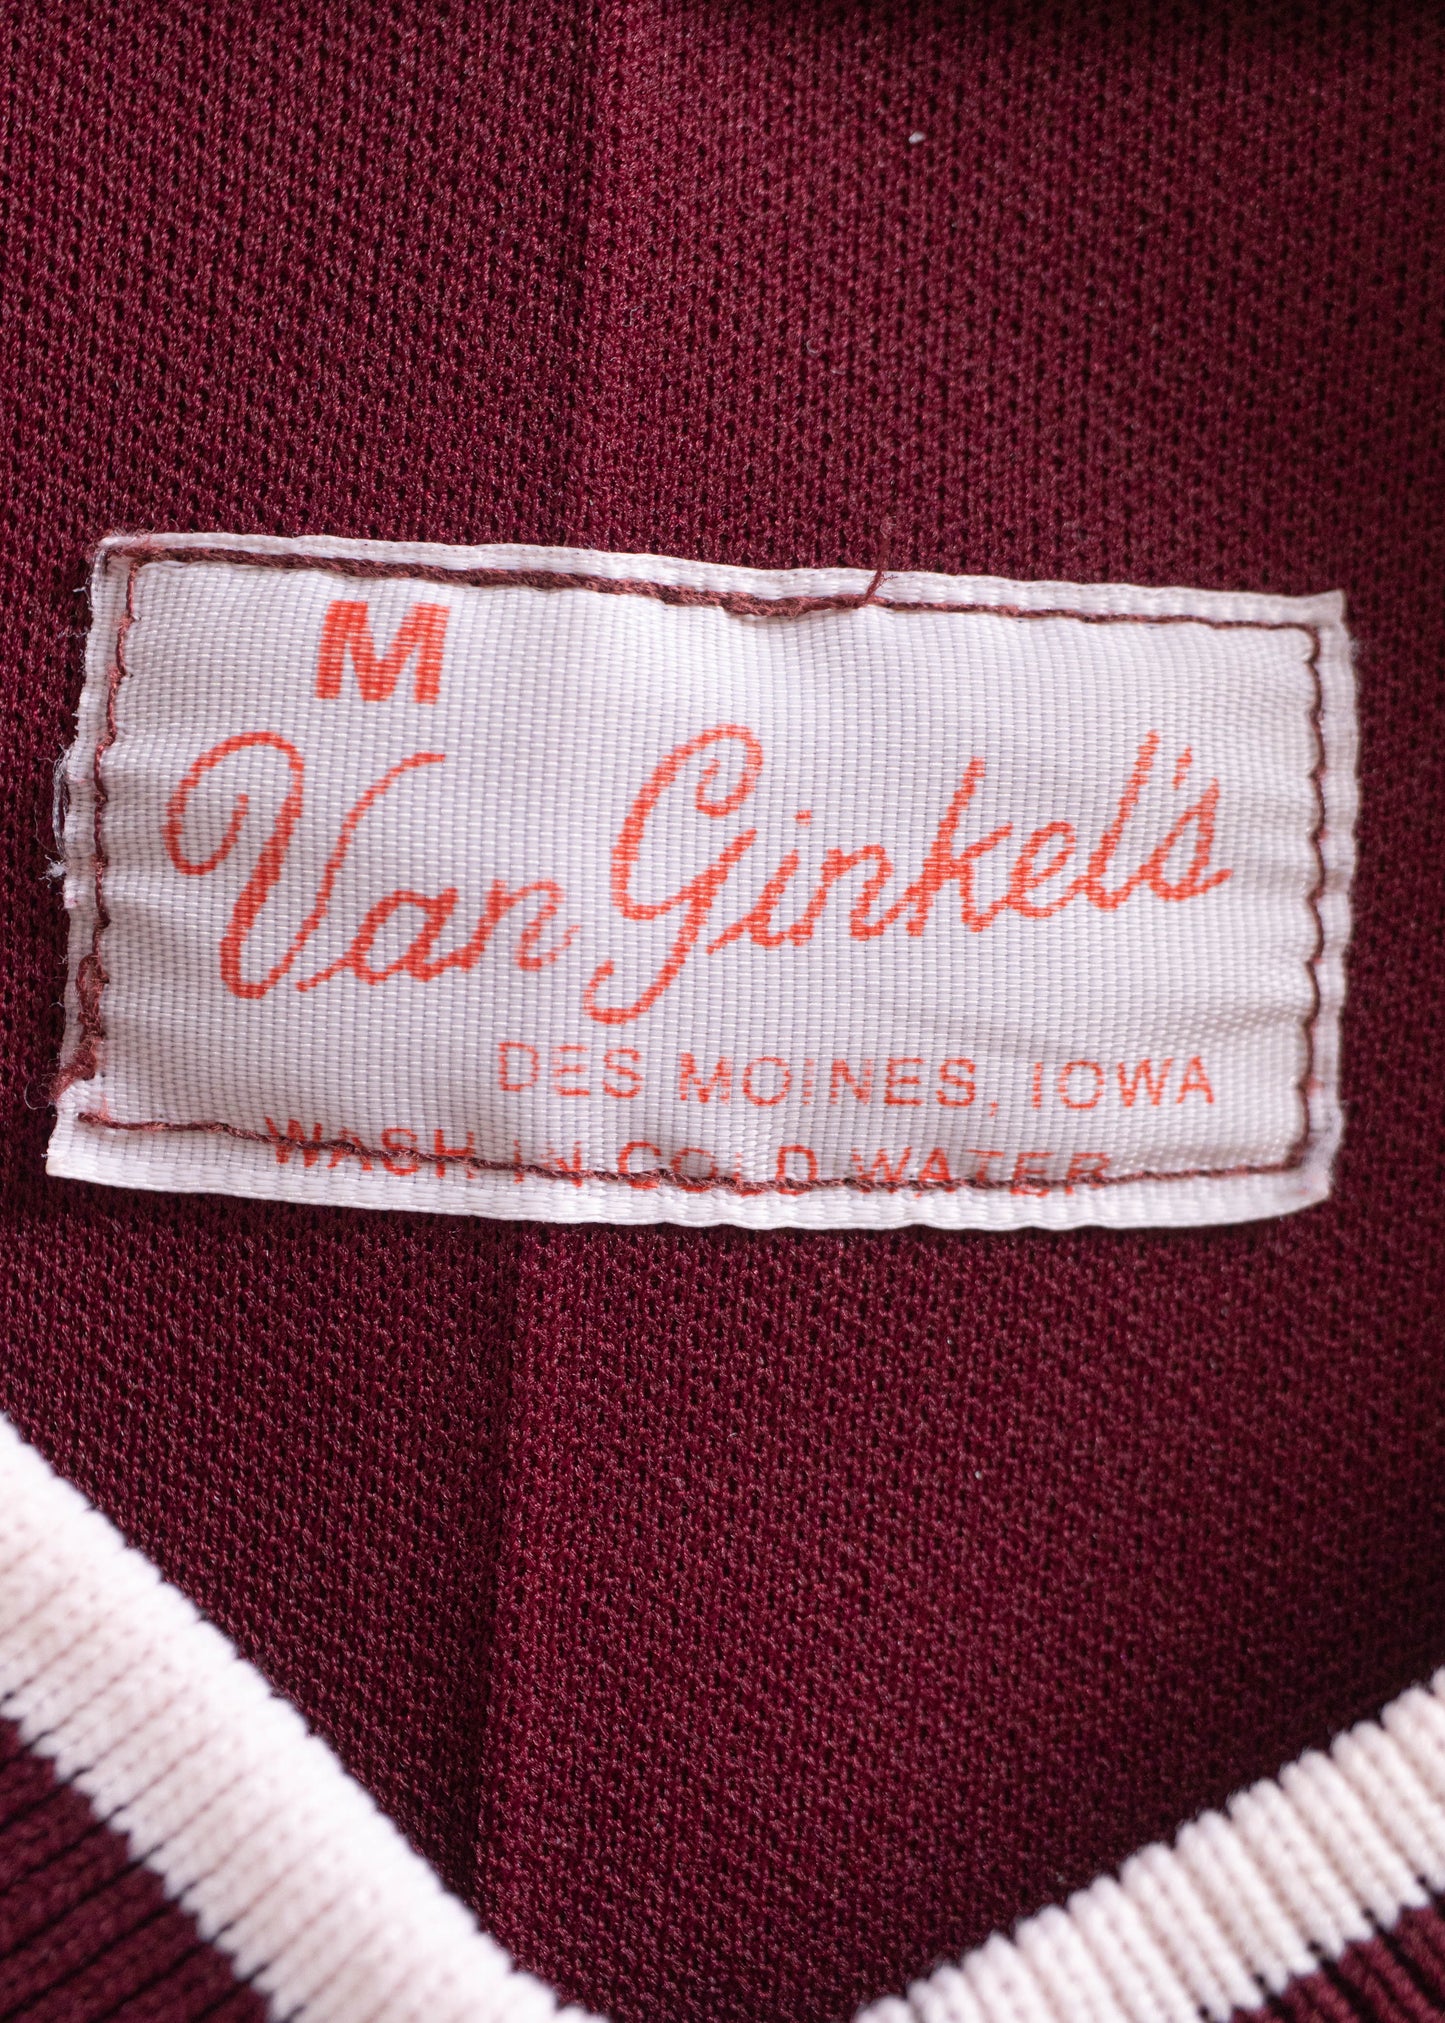 1970s Van Ginkels Short Sleeve Sport Jersey Size M/L